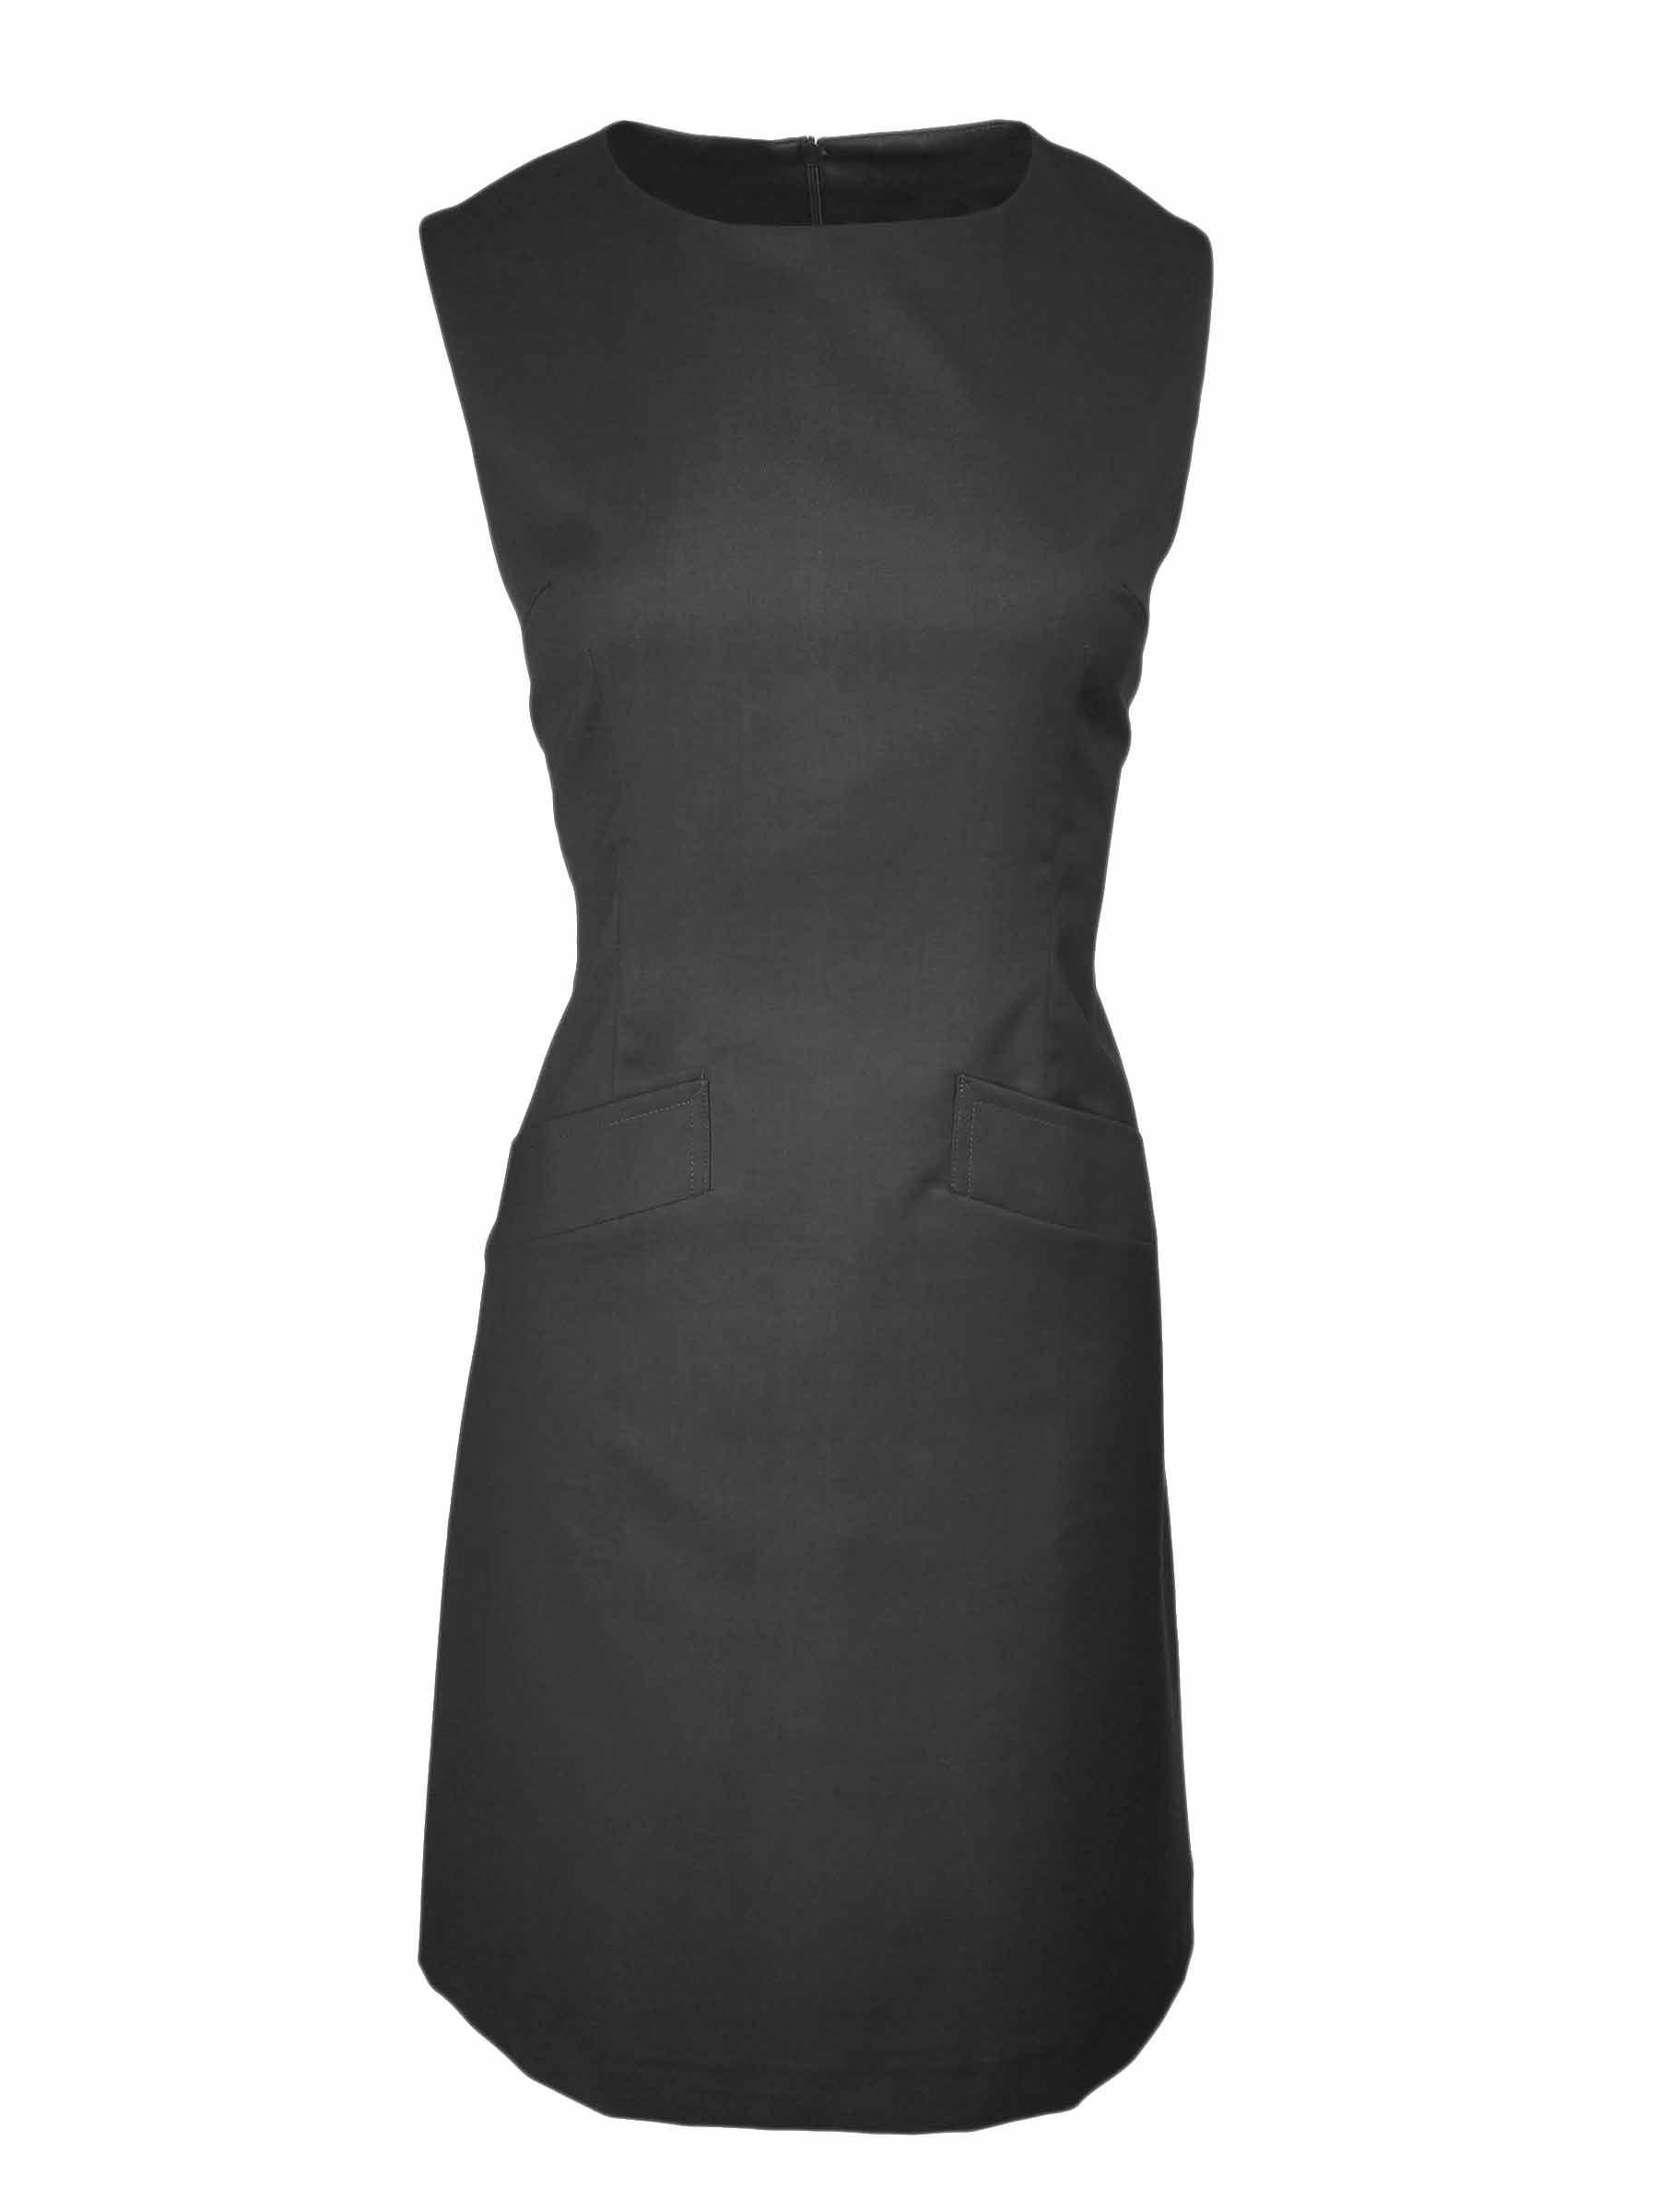 Giorga Sleeveless A-Line Dress - Charcoal - Uniform Edit